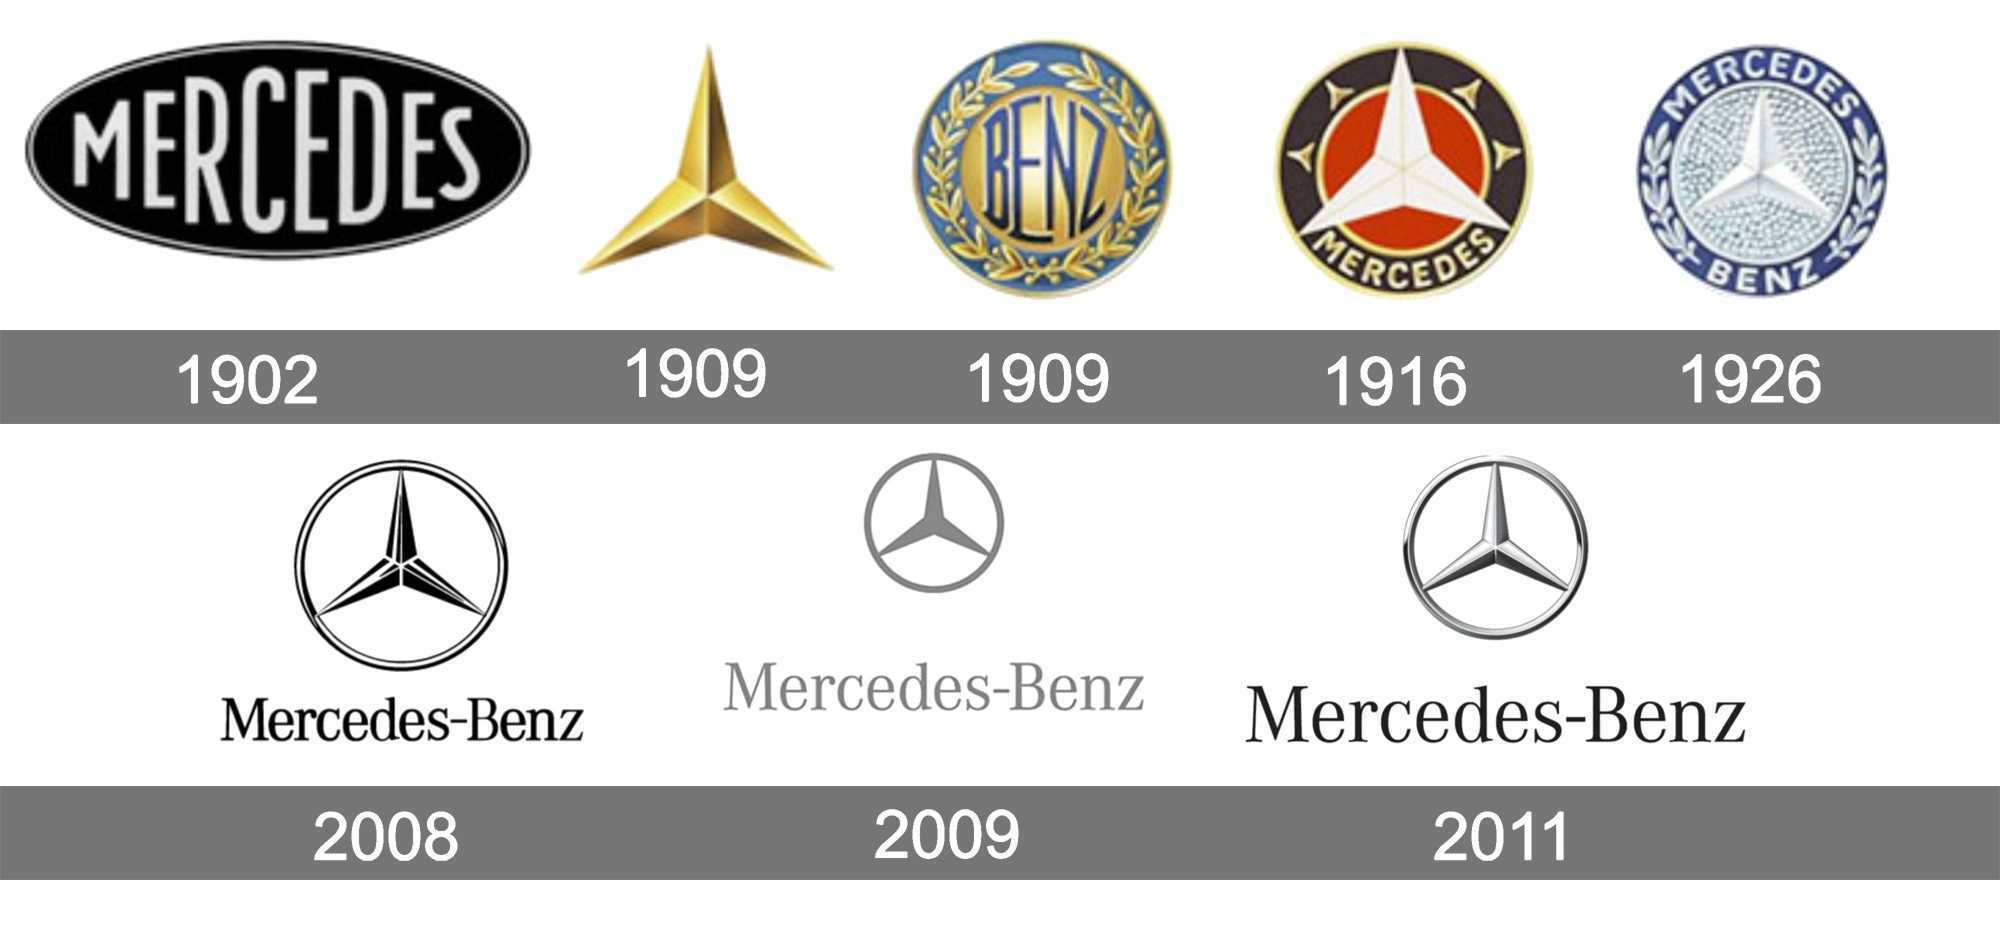 Дата основания бренда. Эволюция логотипа Mercedes-Benz. Mercedes logo Evolution. Эволюция логотипов Мерседес Бенц. Мерседес Бенц значки по годам.